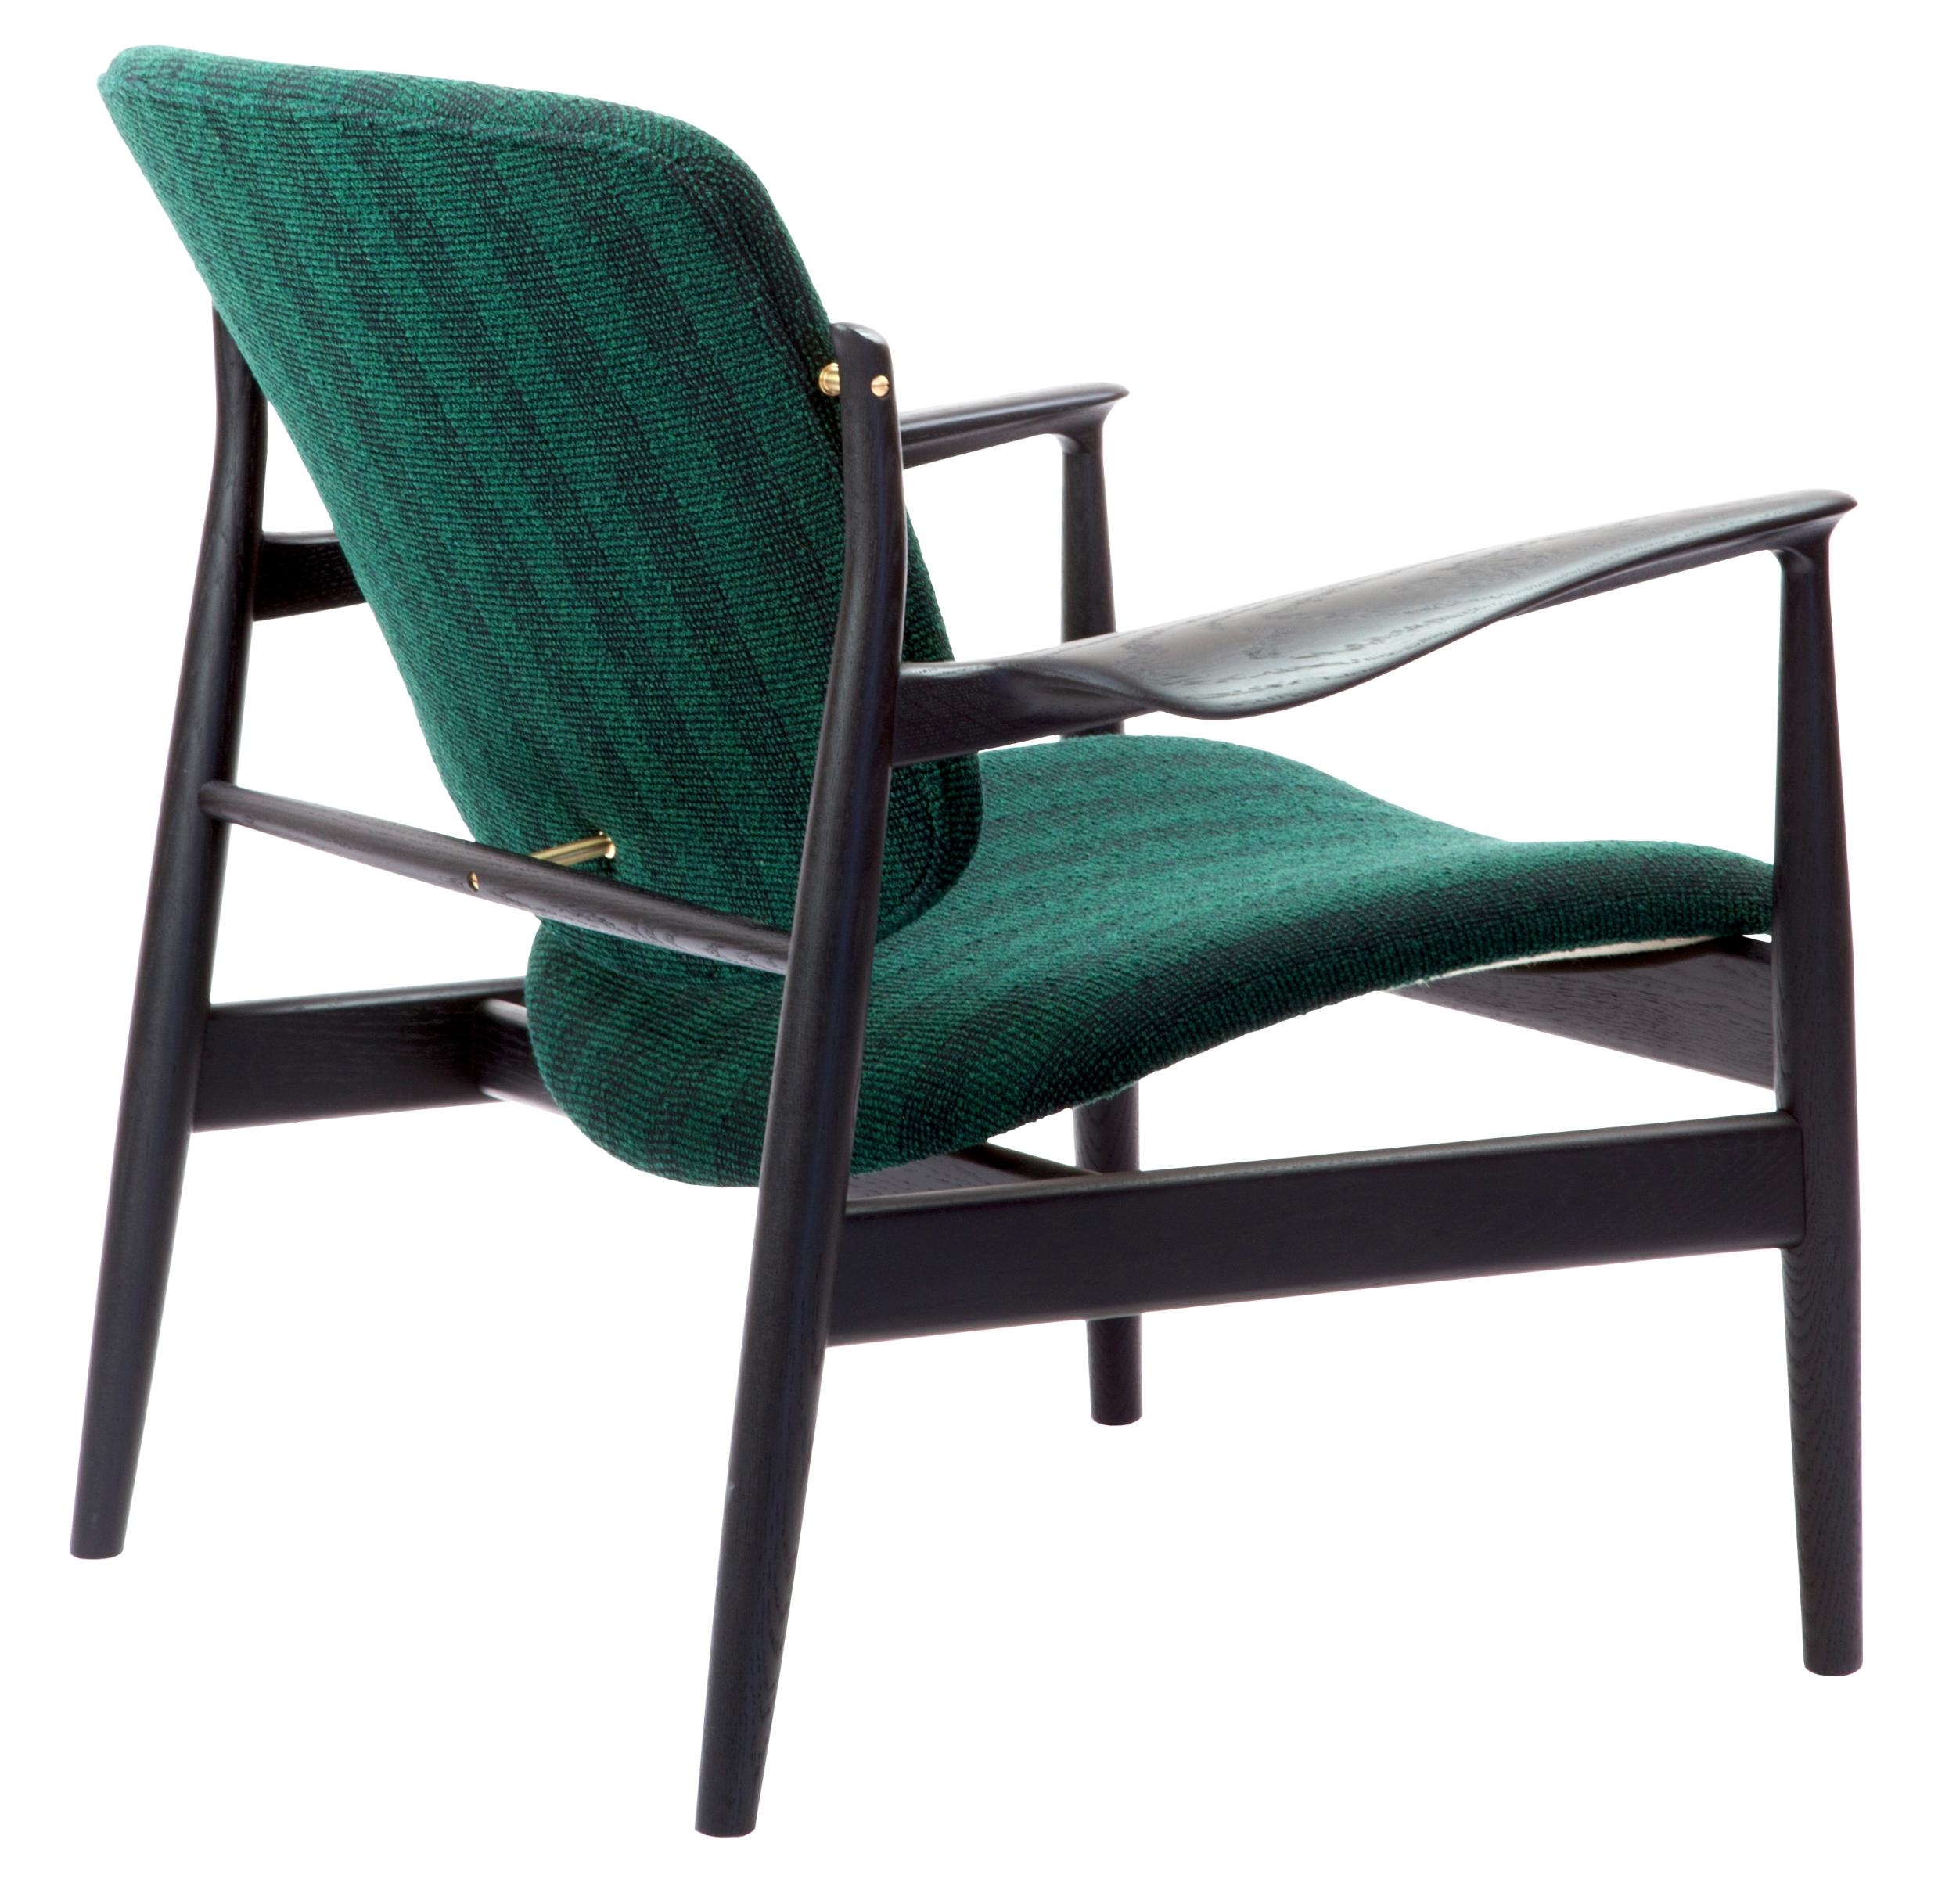 Danish Finn Juhl France Chair in Wood and Green Upholstery